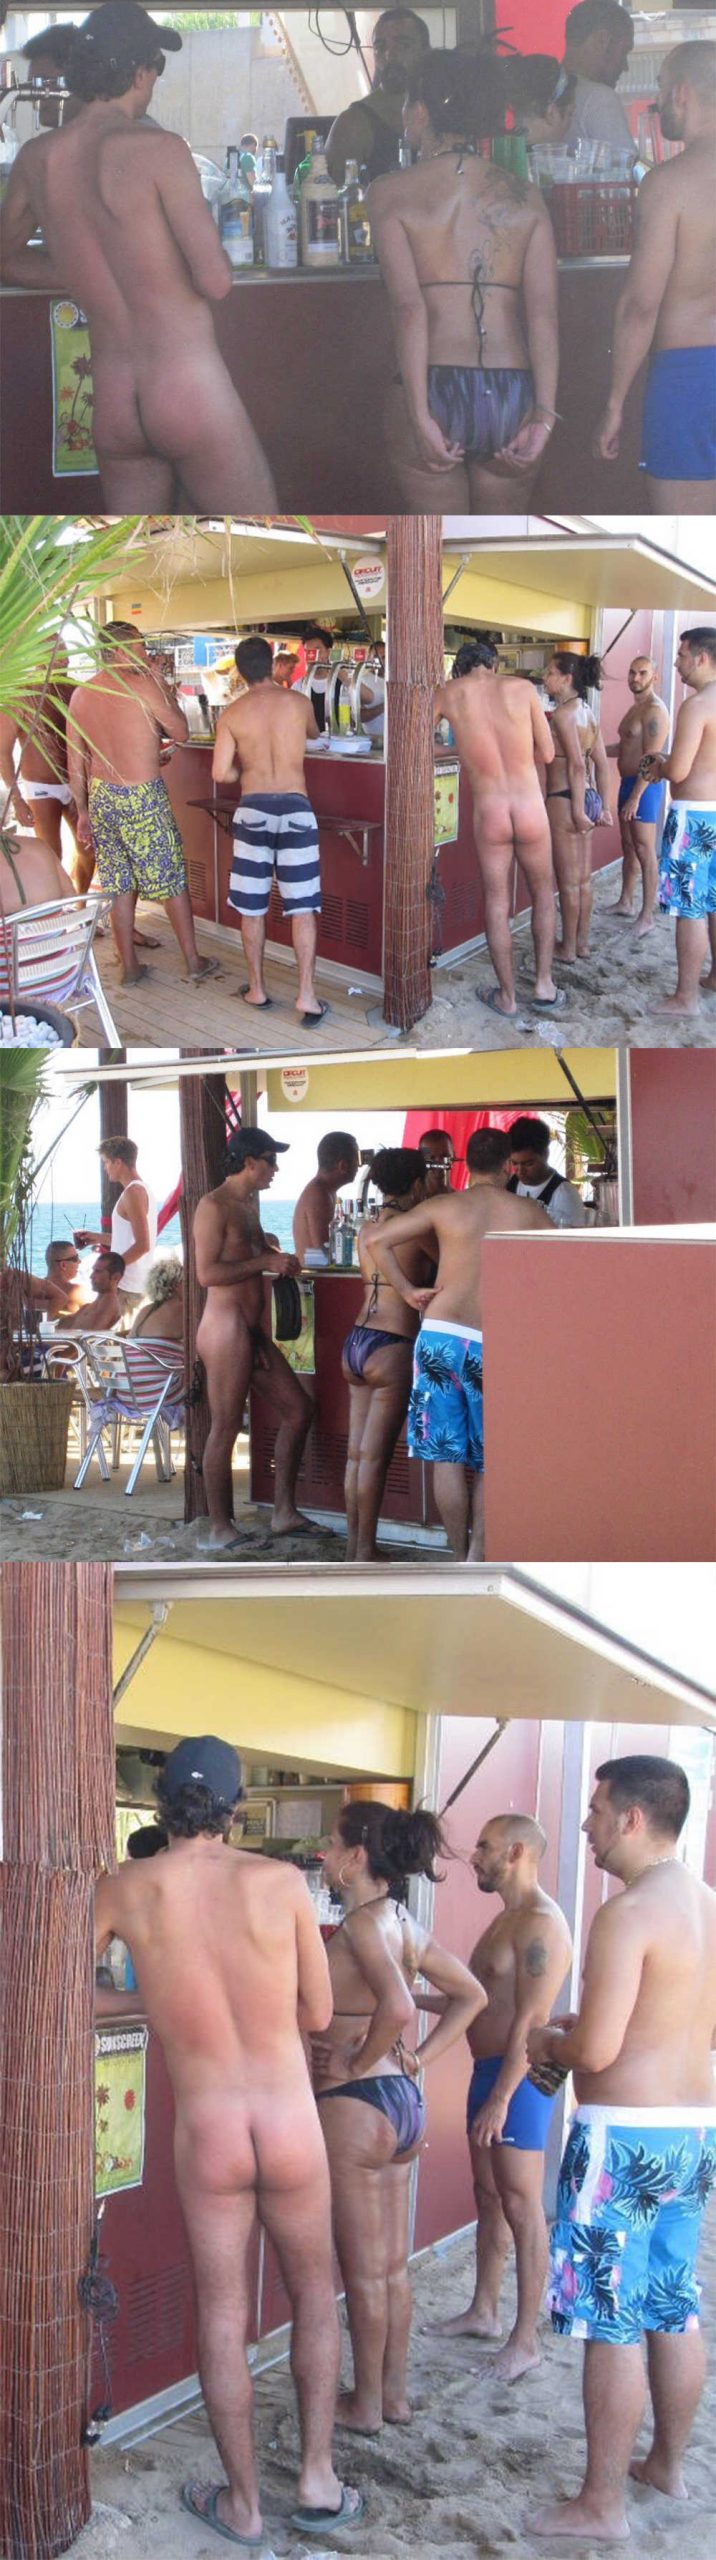 nudist man caught at the beach bar